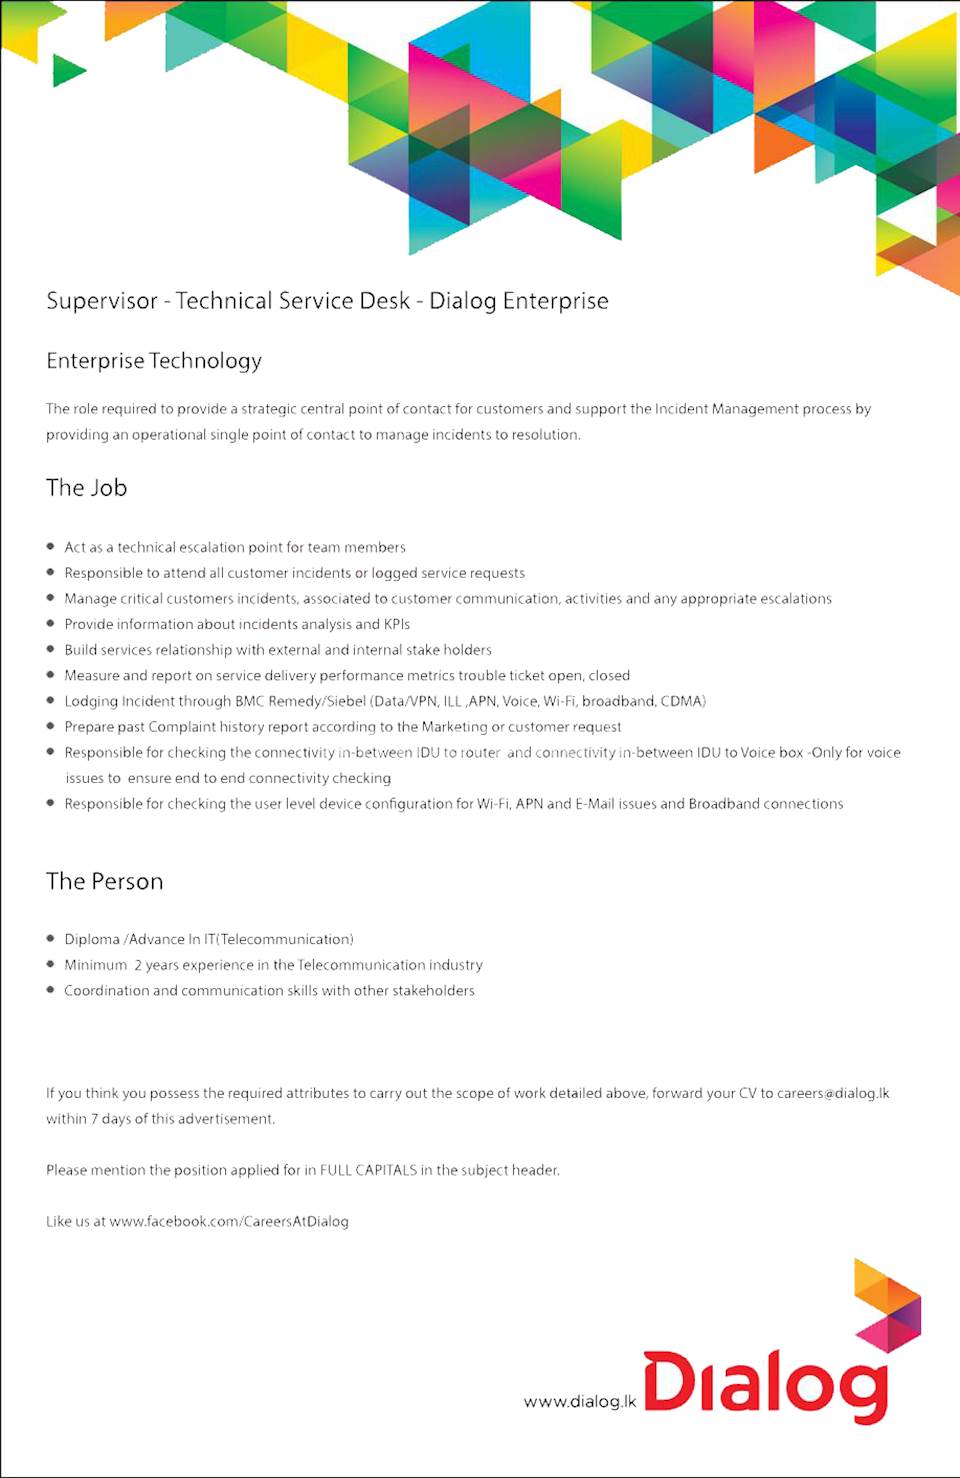 Supervisor - Technical Service Desk - Dialog Enterprise 